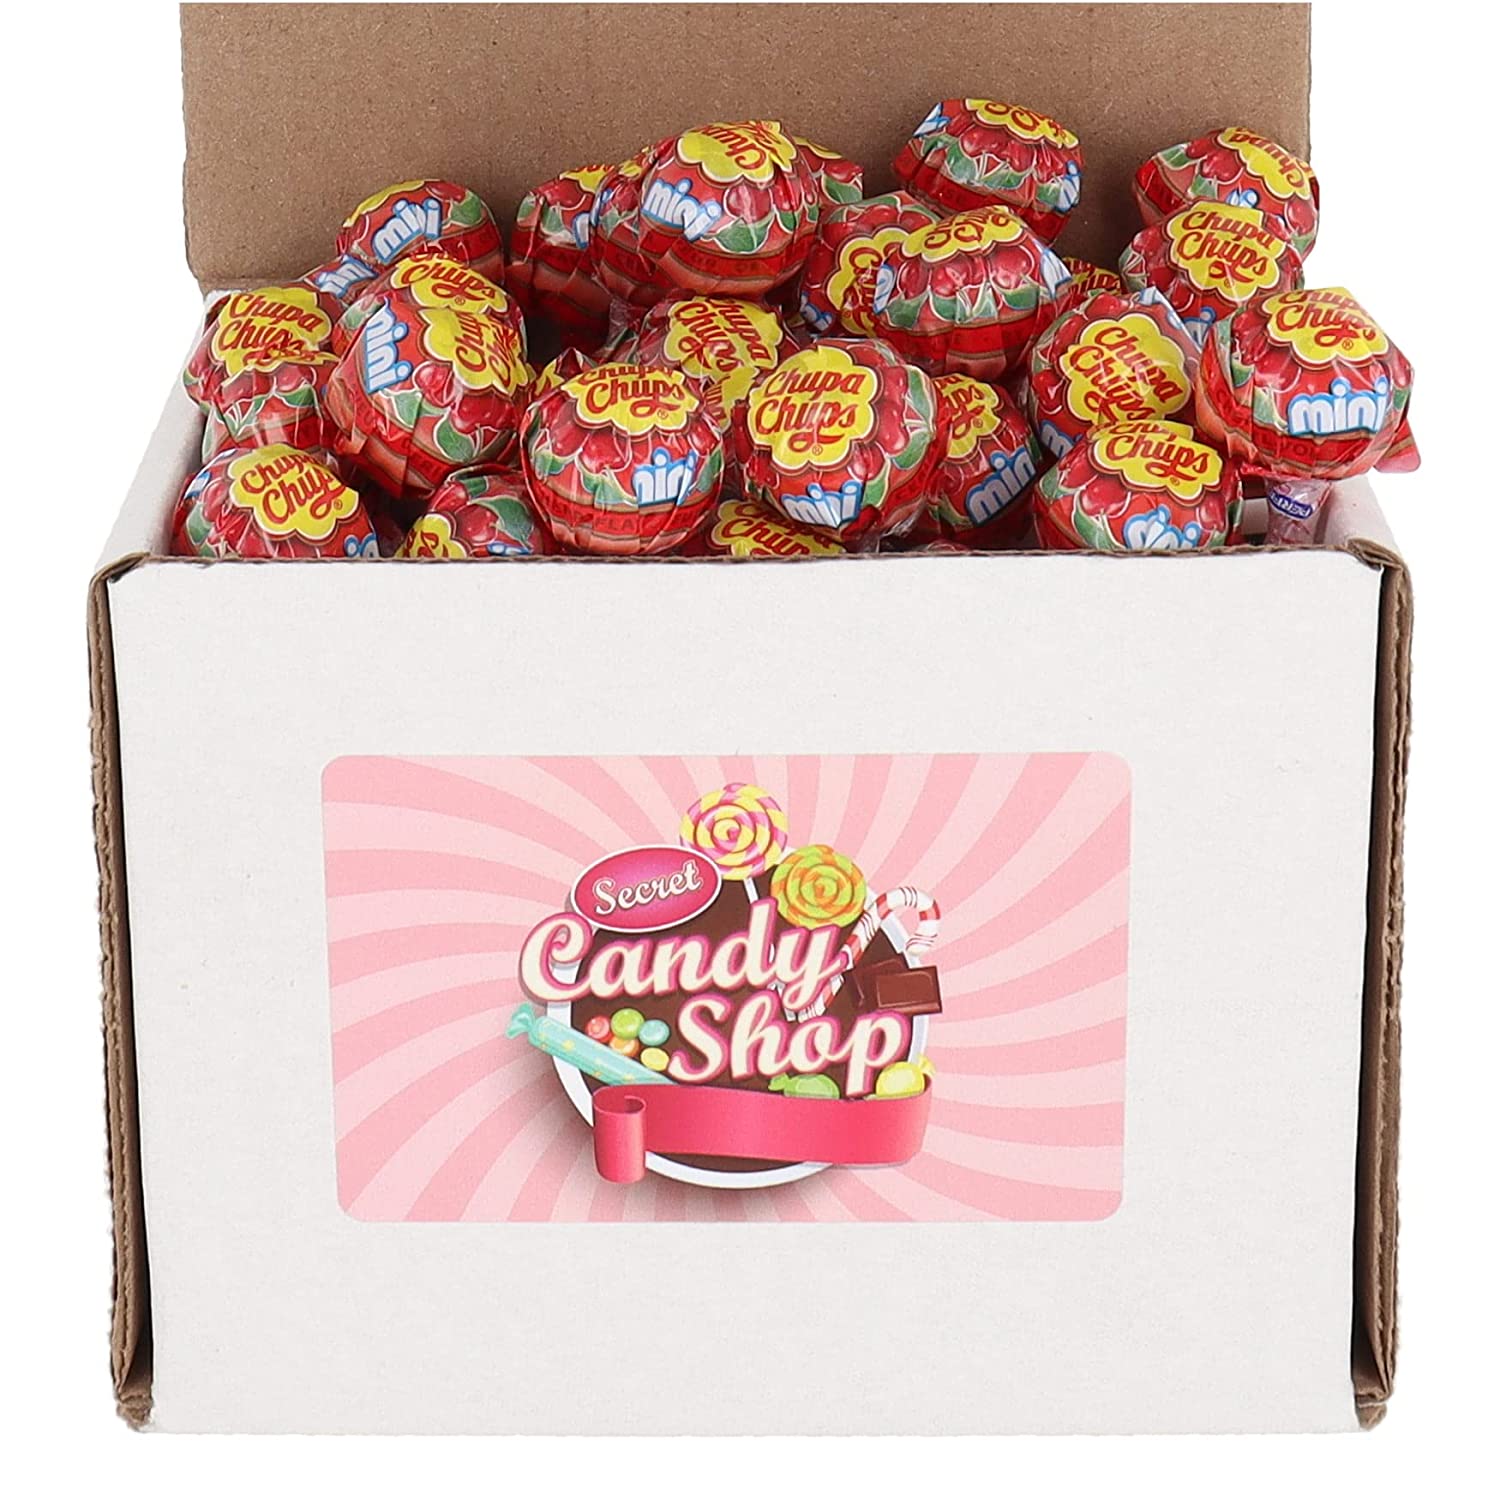 Chupa Chups Lollipops - Cherry - Pack of 40